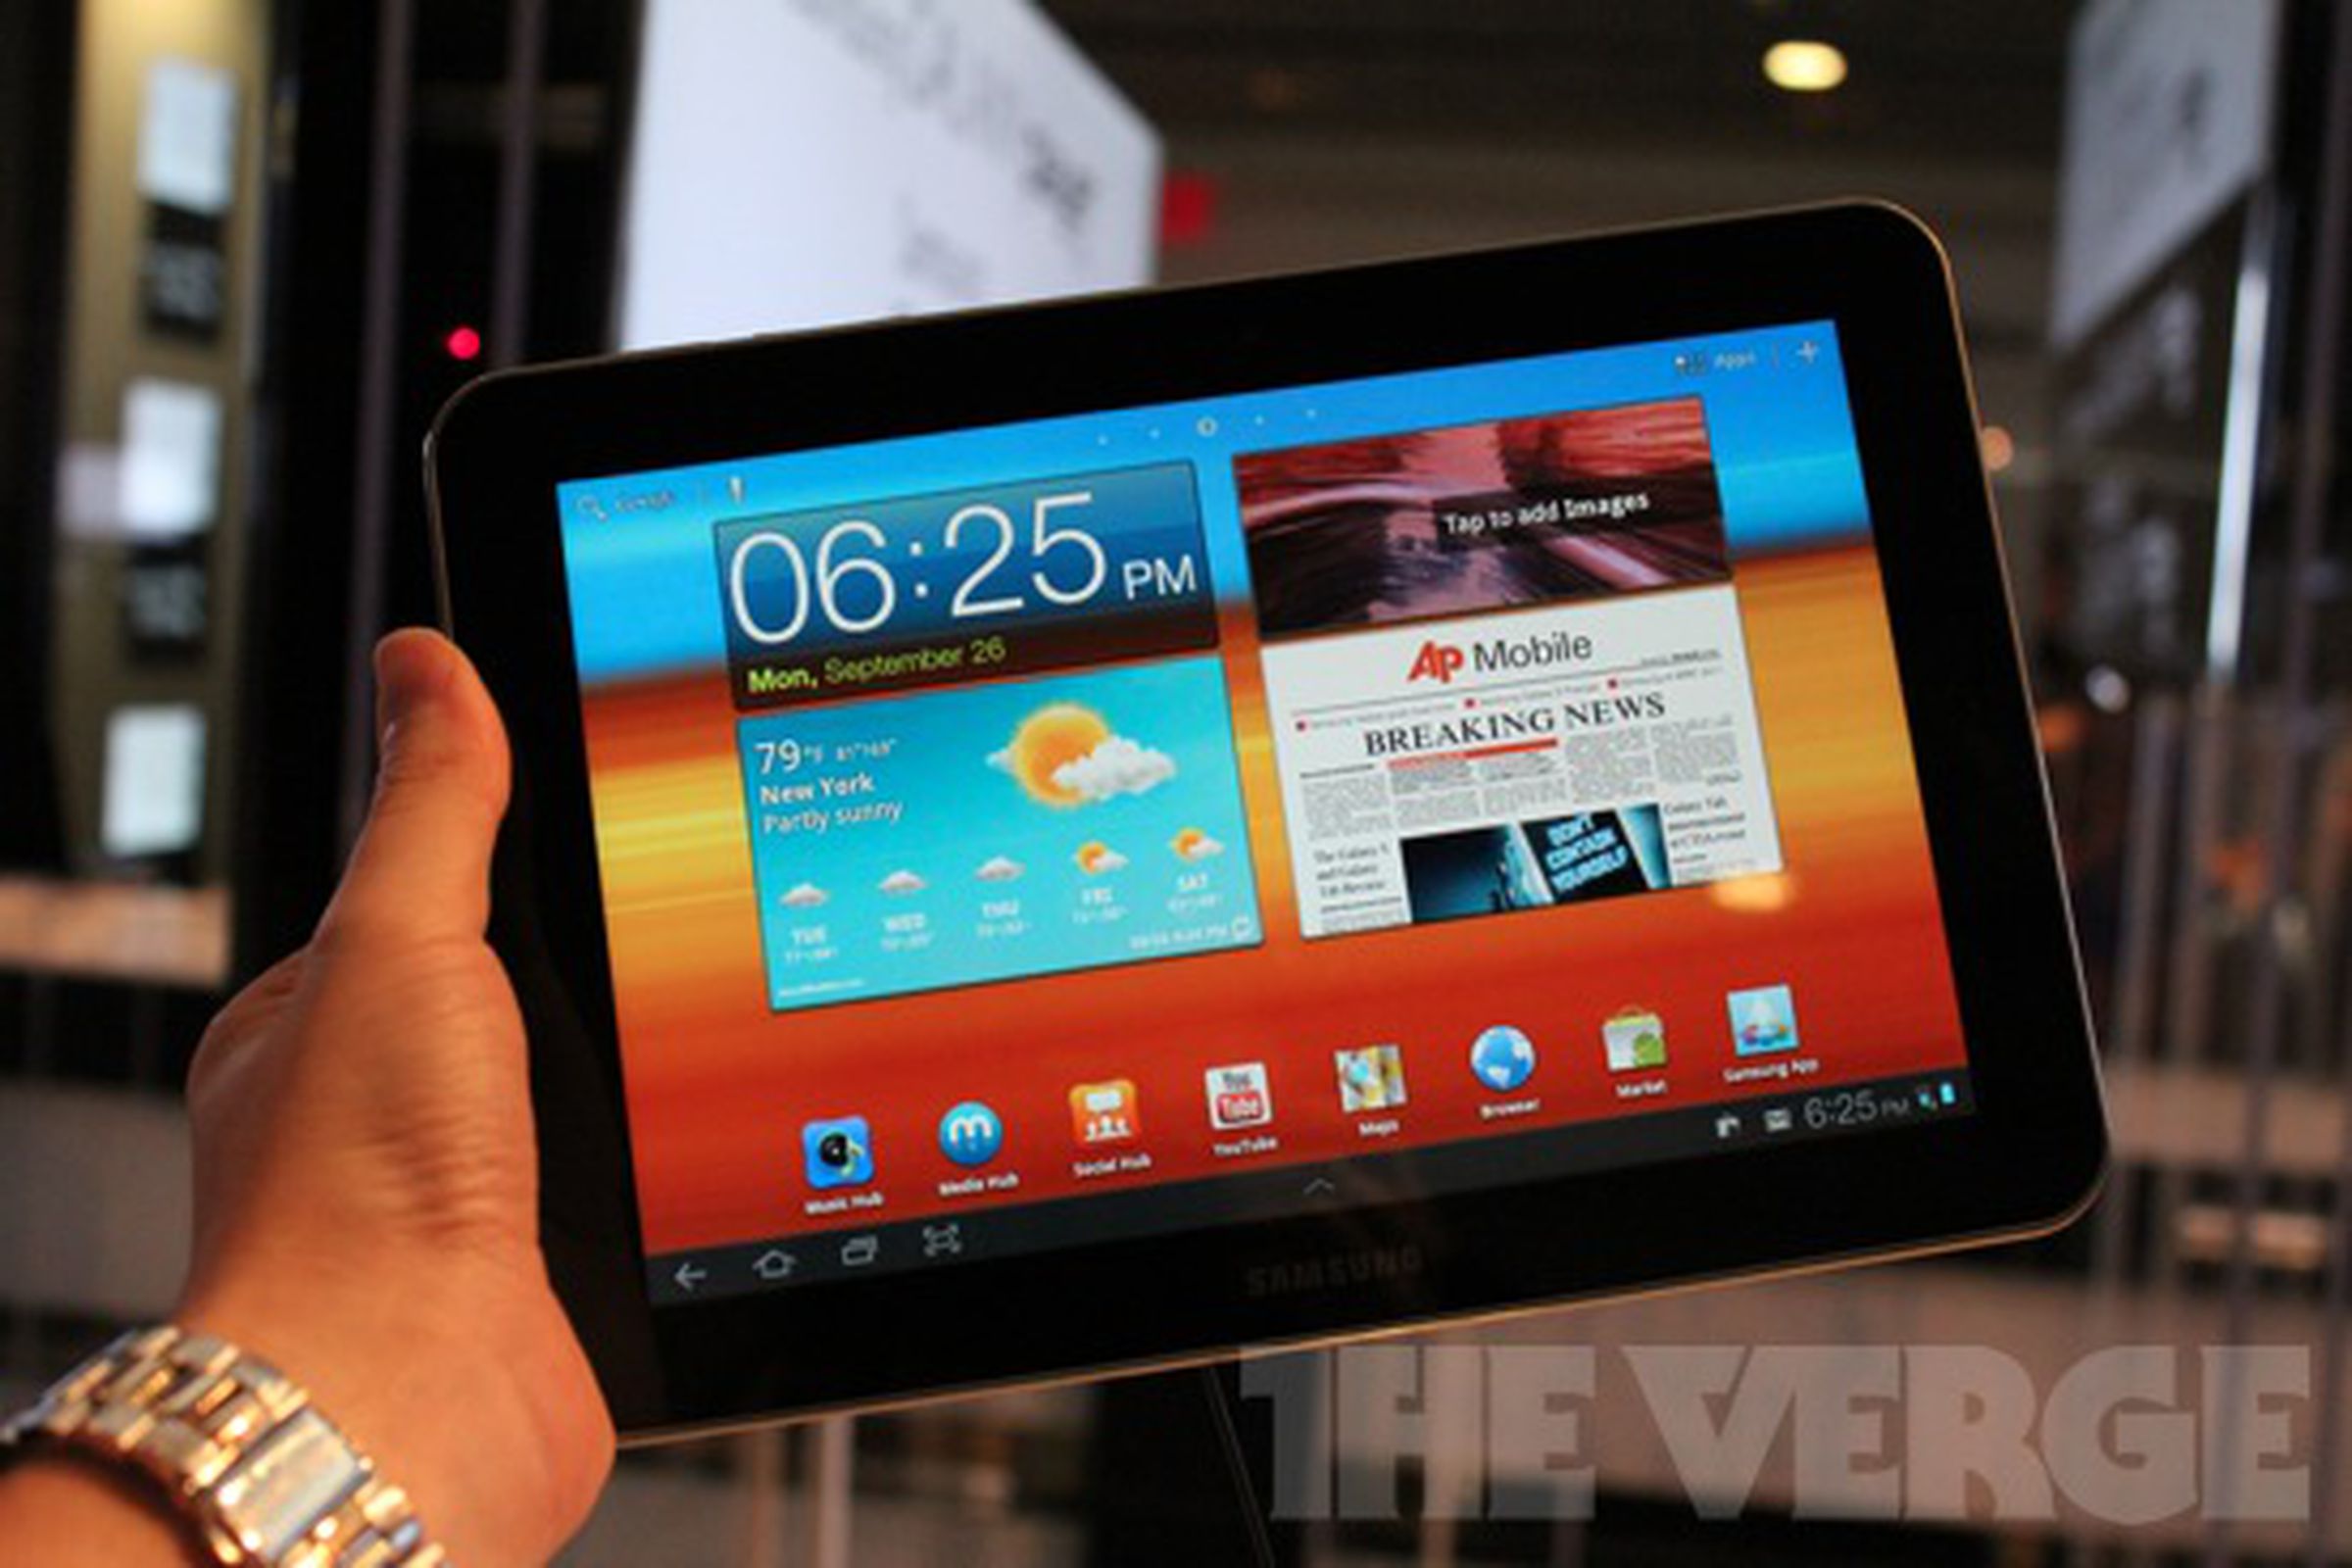 Galaxy Tab 8.9 hands-on